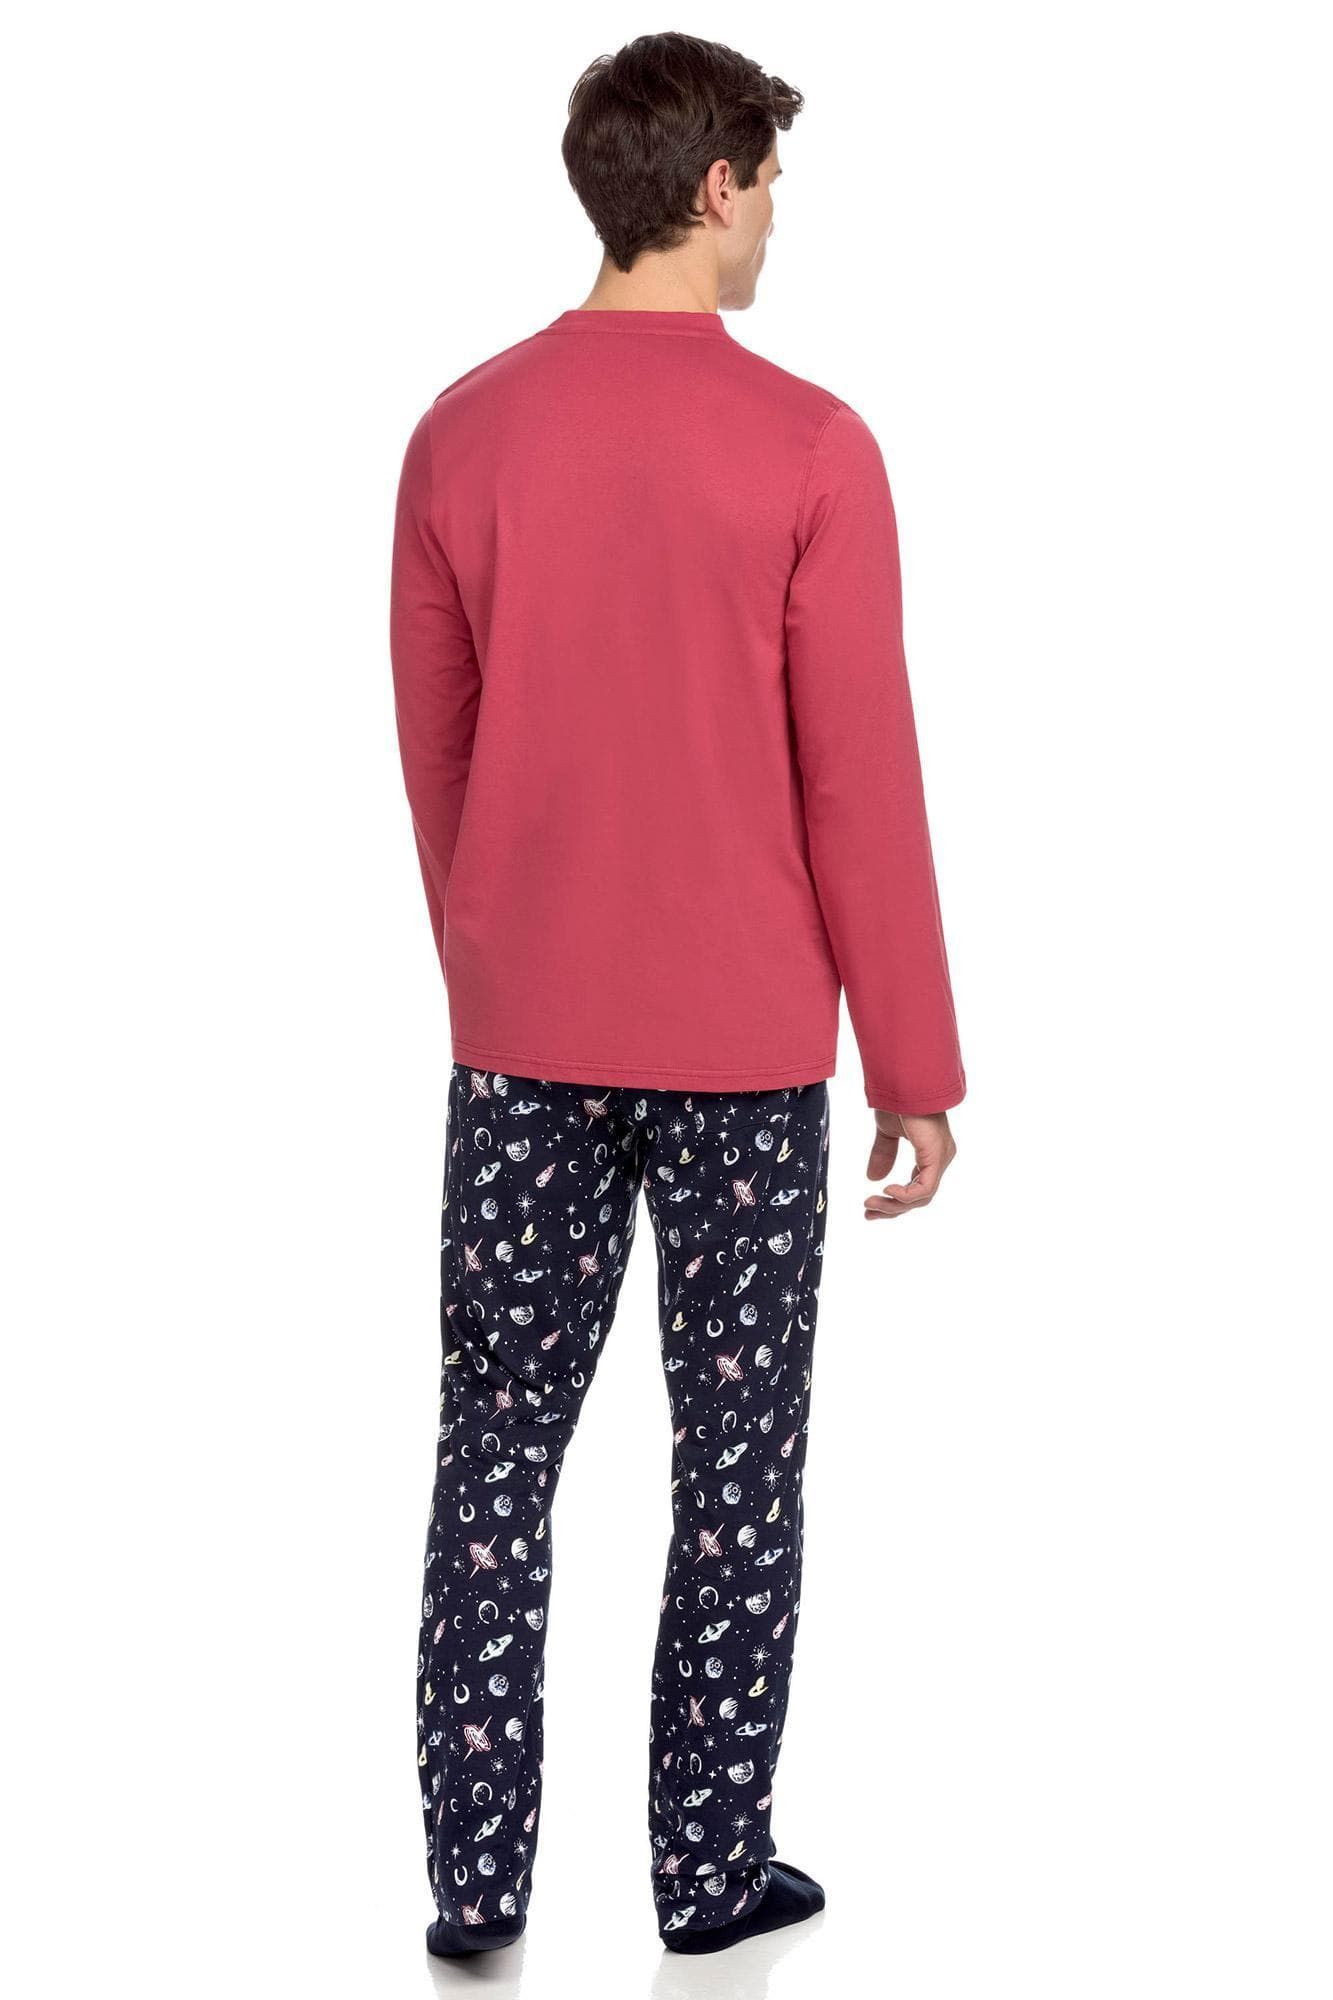 Men’s Pyjamas with pocket